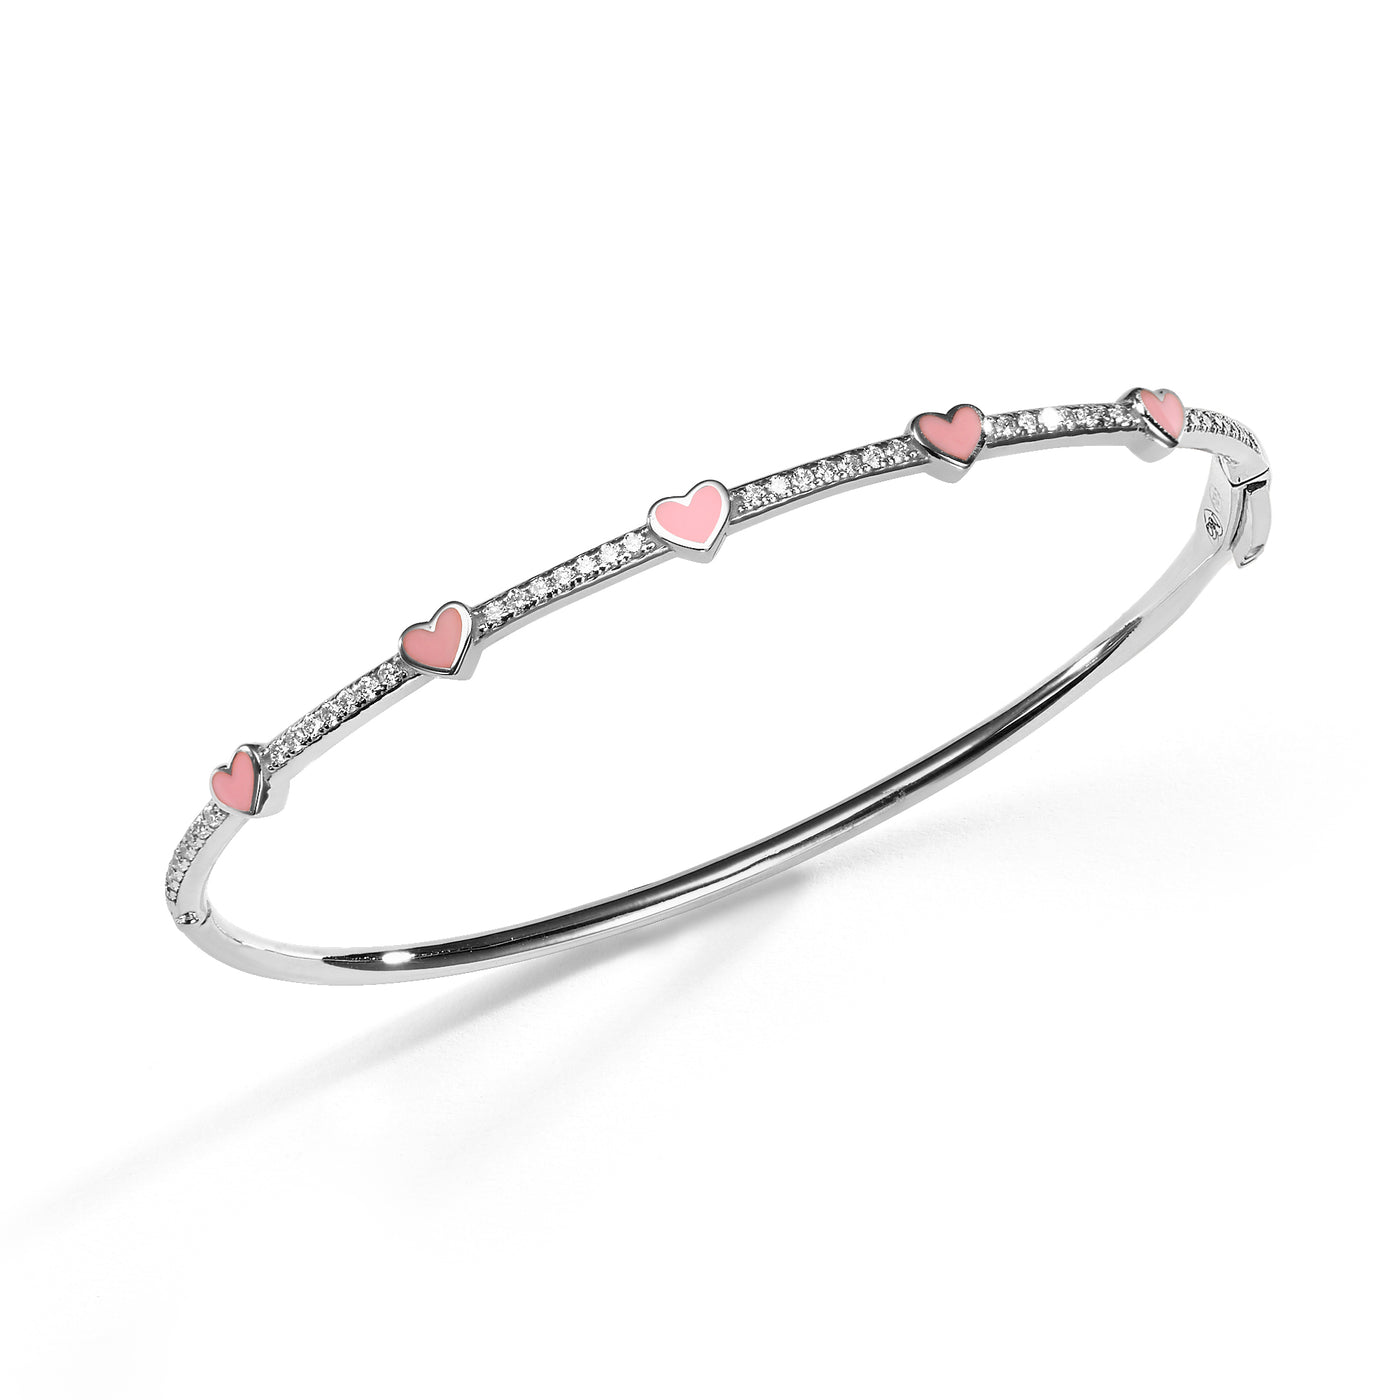 5 Hearts medium bangle bracelet - light pink